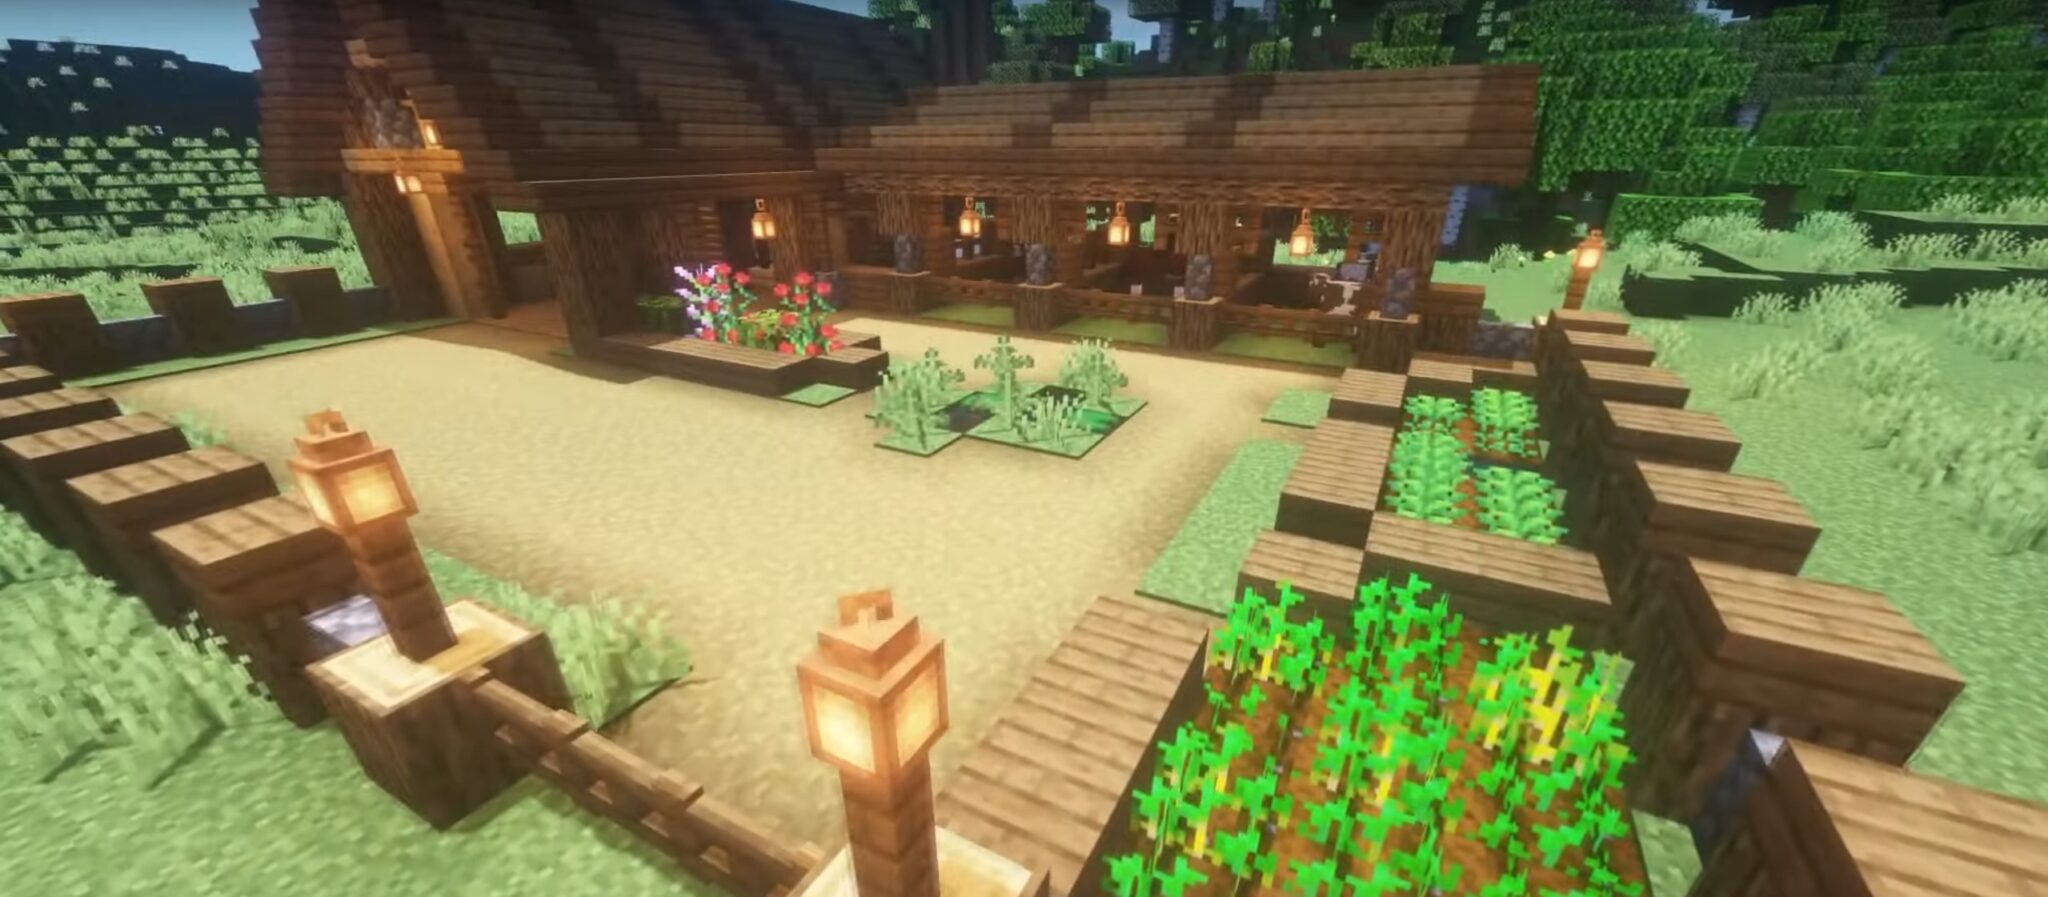 Minecraft Barn Ideas and Design